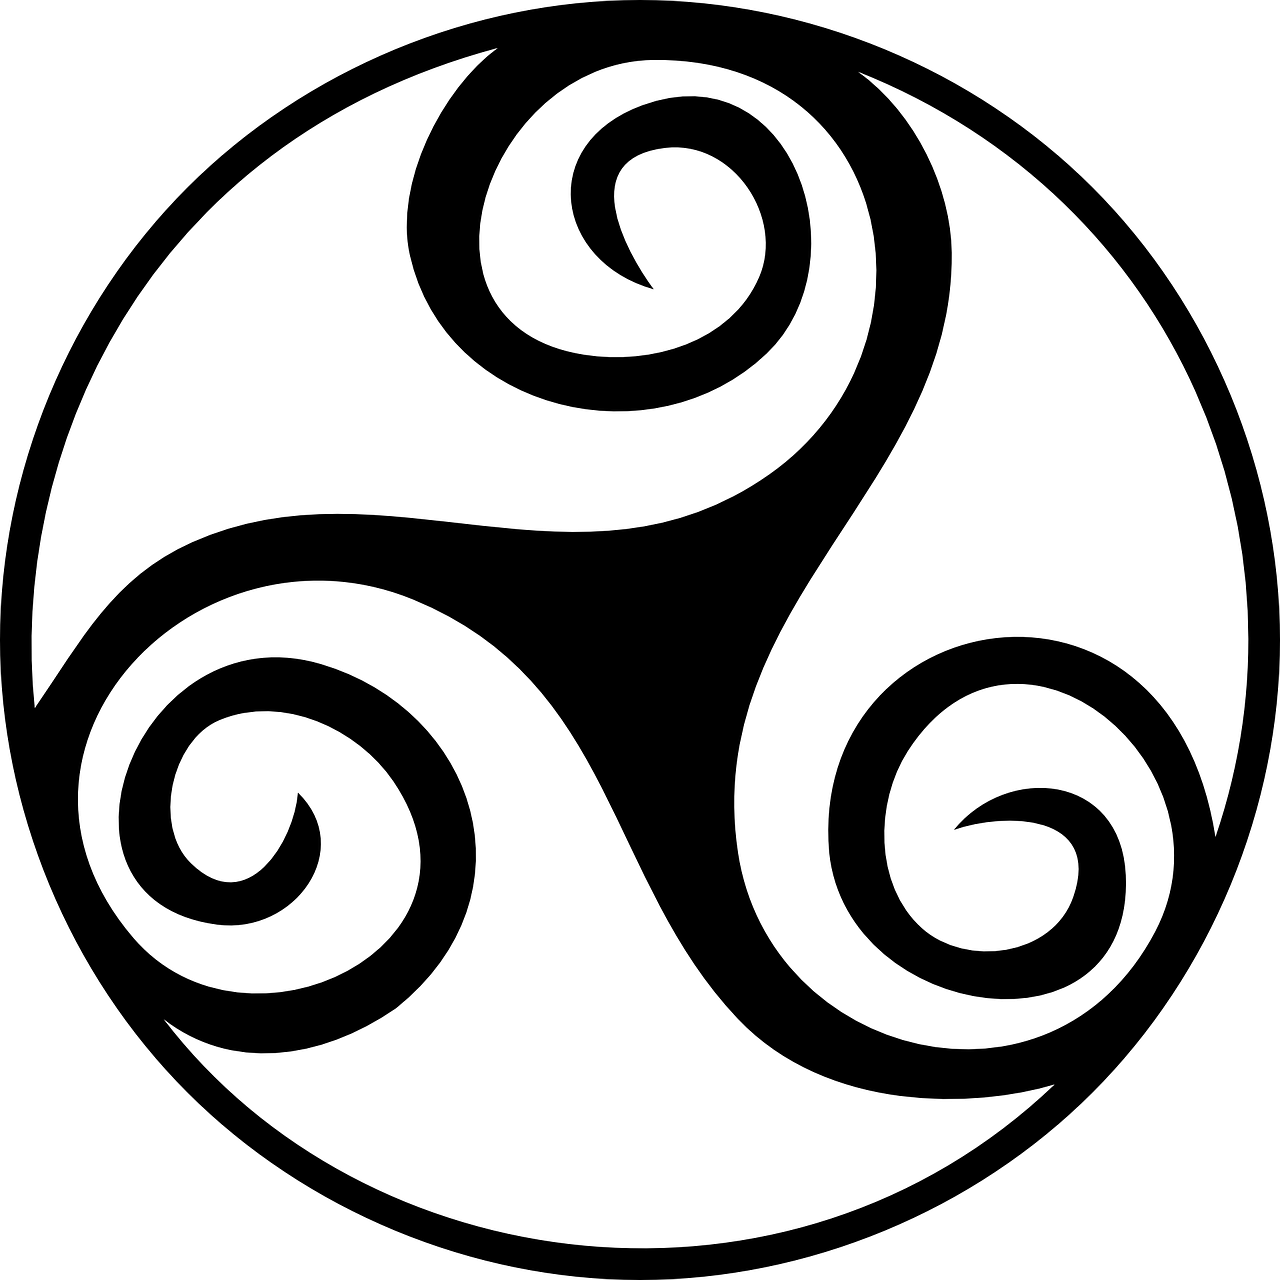 Edit free photo of Celtic,tribal,knot,circle,swirl - needpix.com